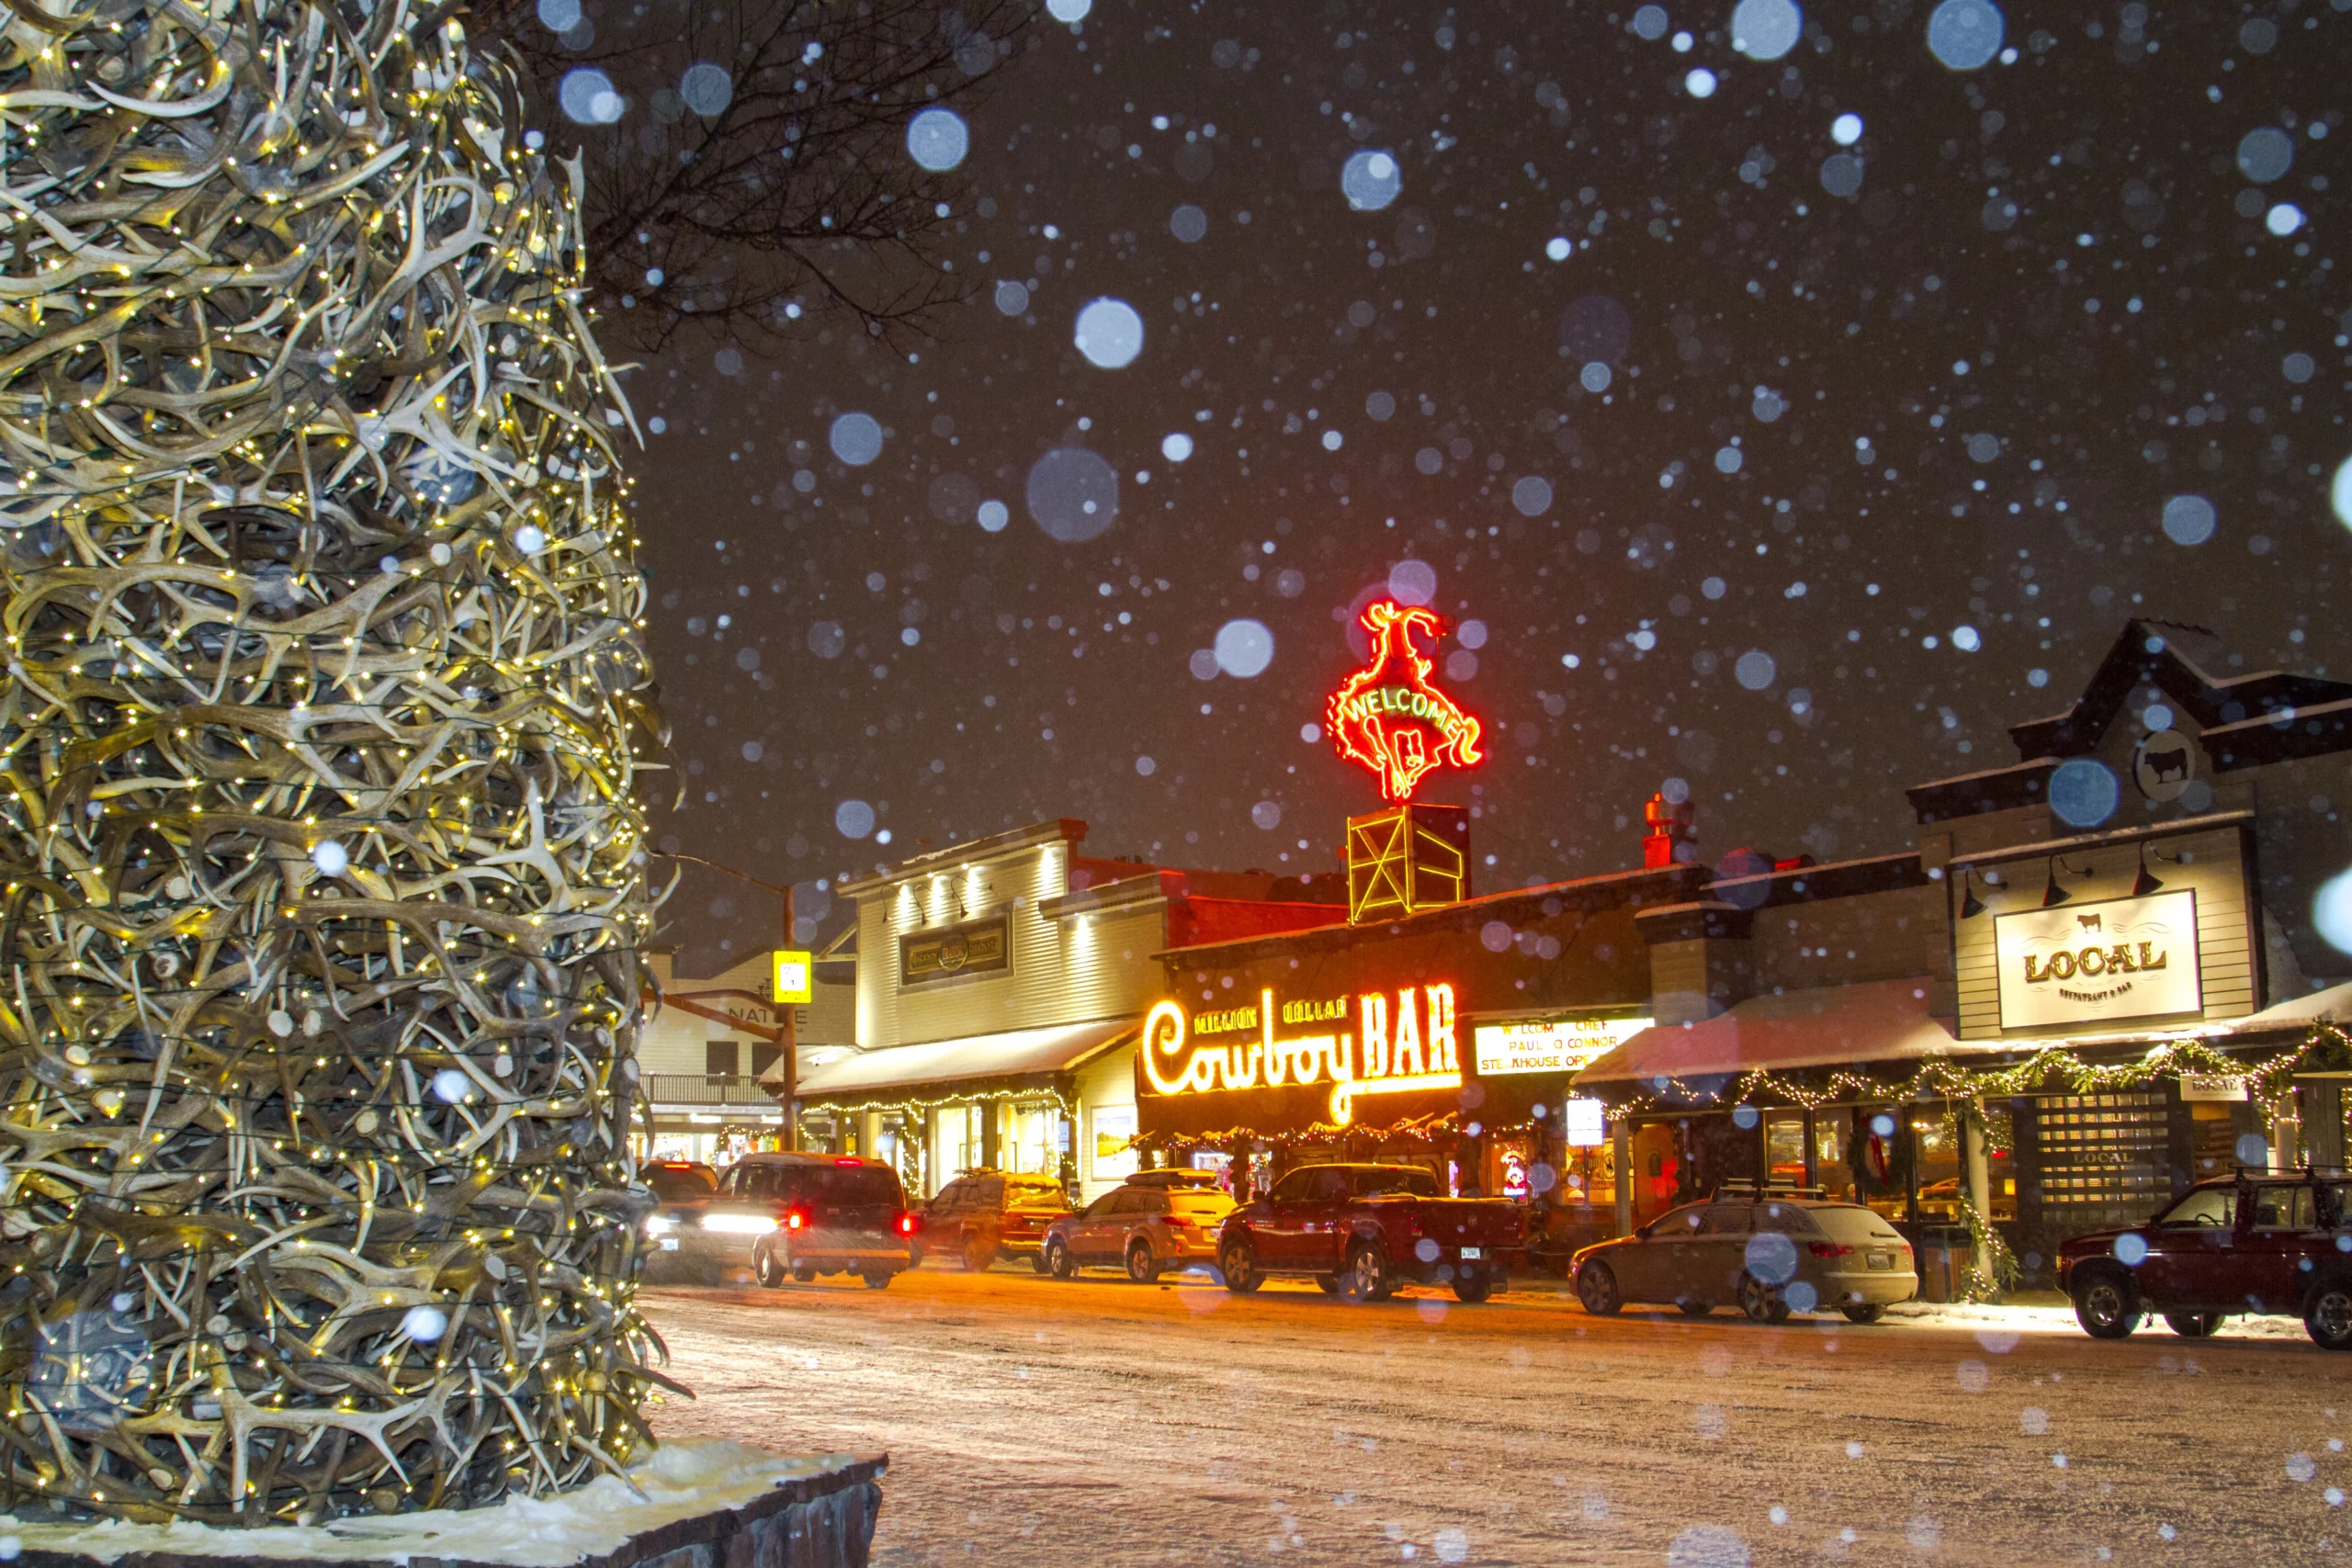 cowboy bar lit up at night, snow falling